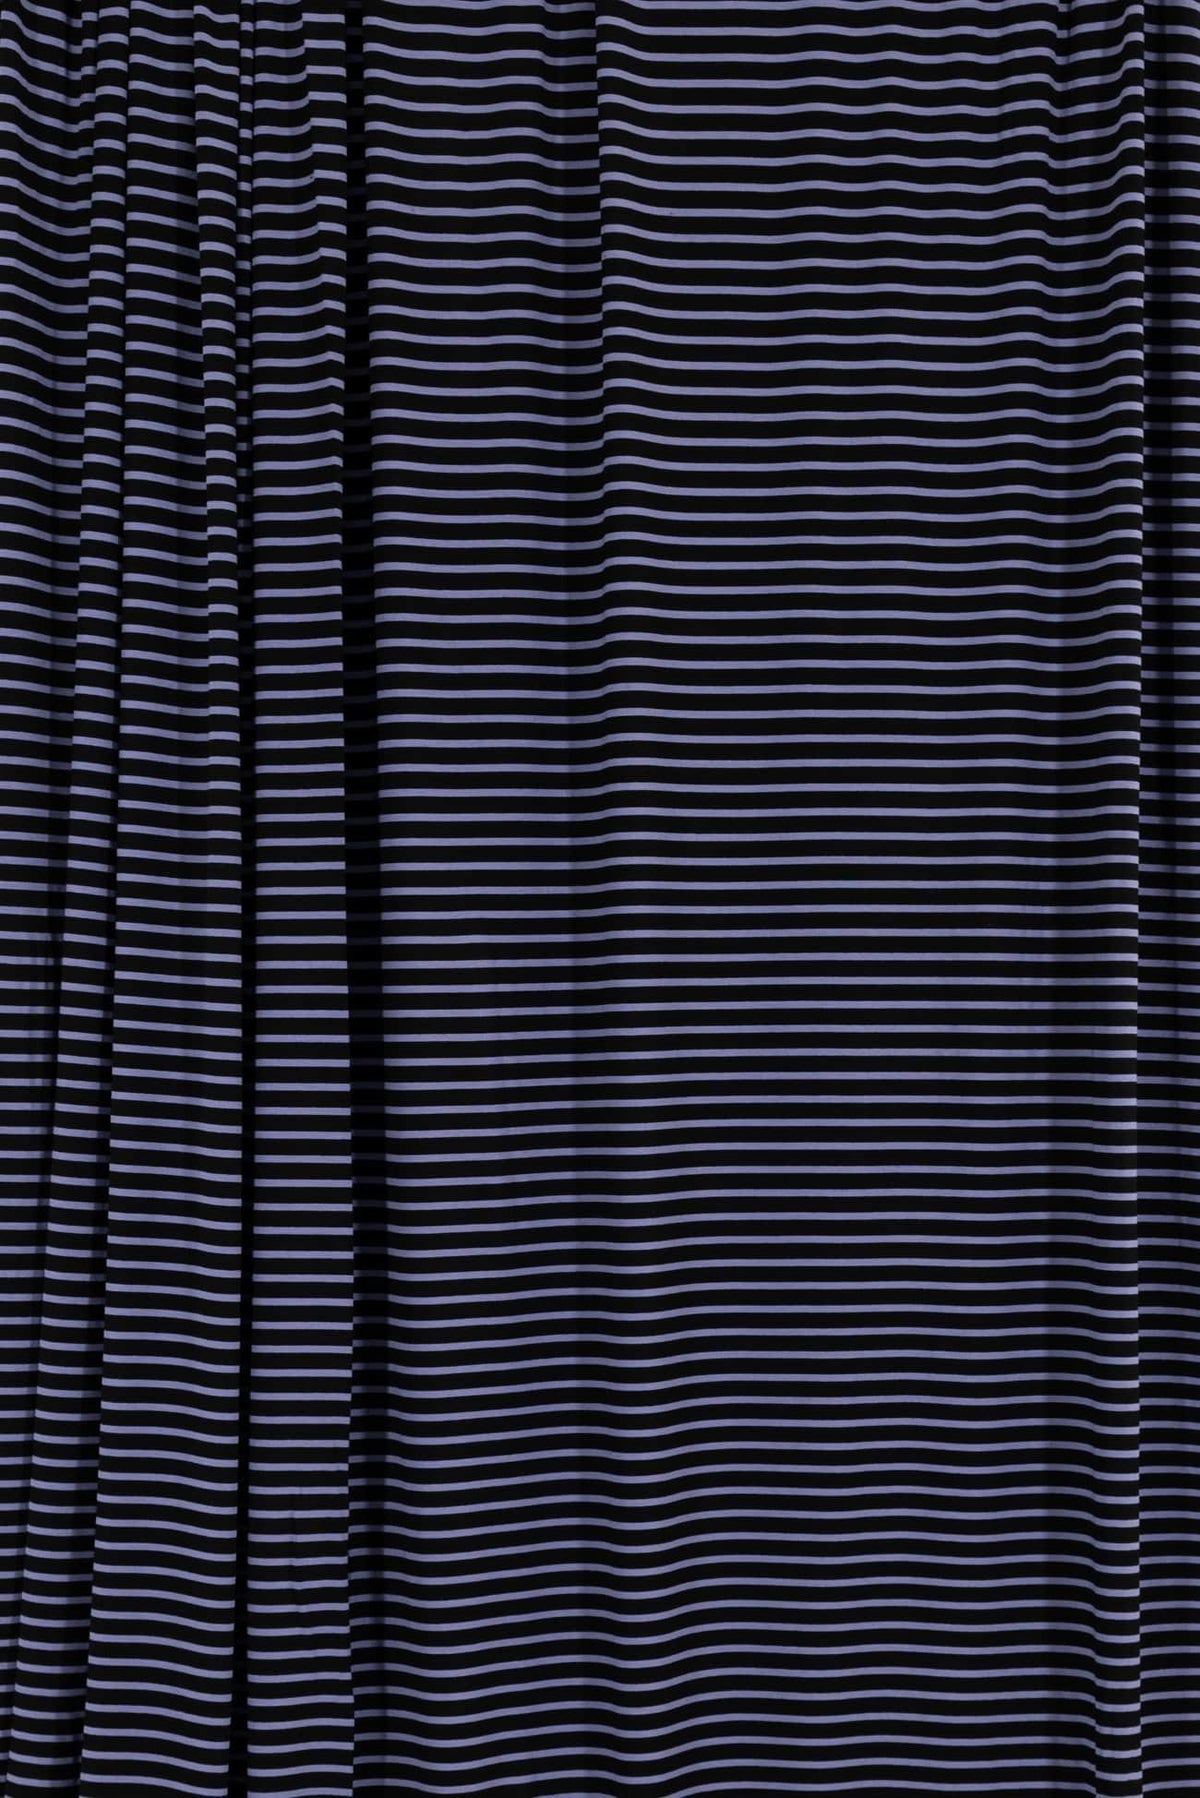 Cologne Express Stripe USA Knit-2 units (1 yard) - Marcy Tilton Fabrics